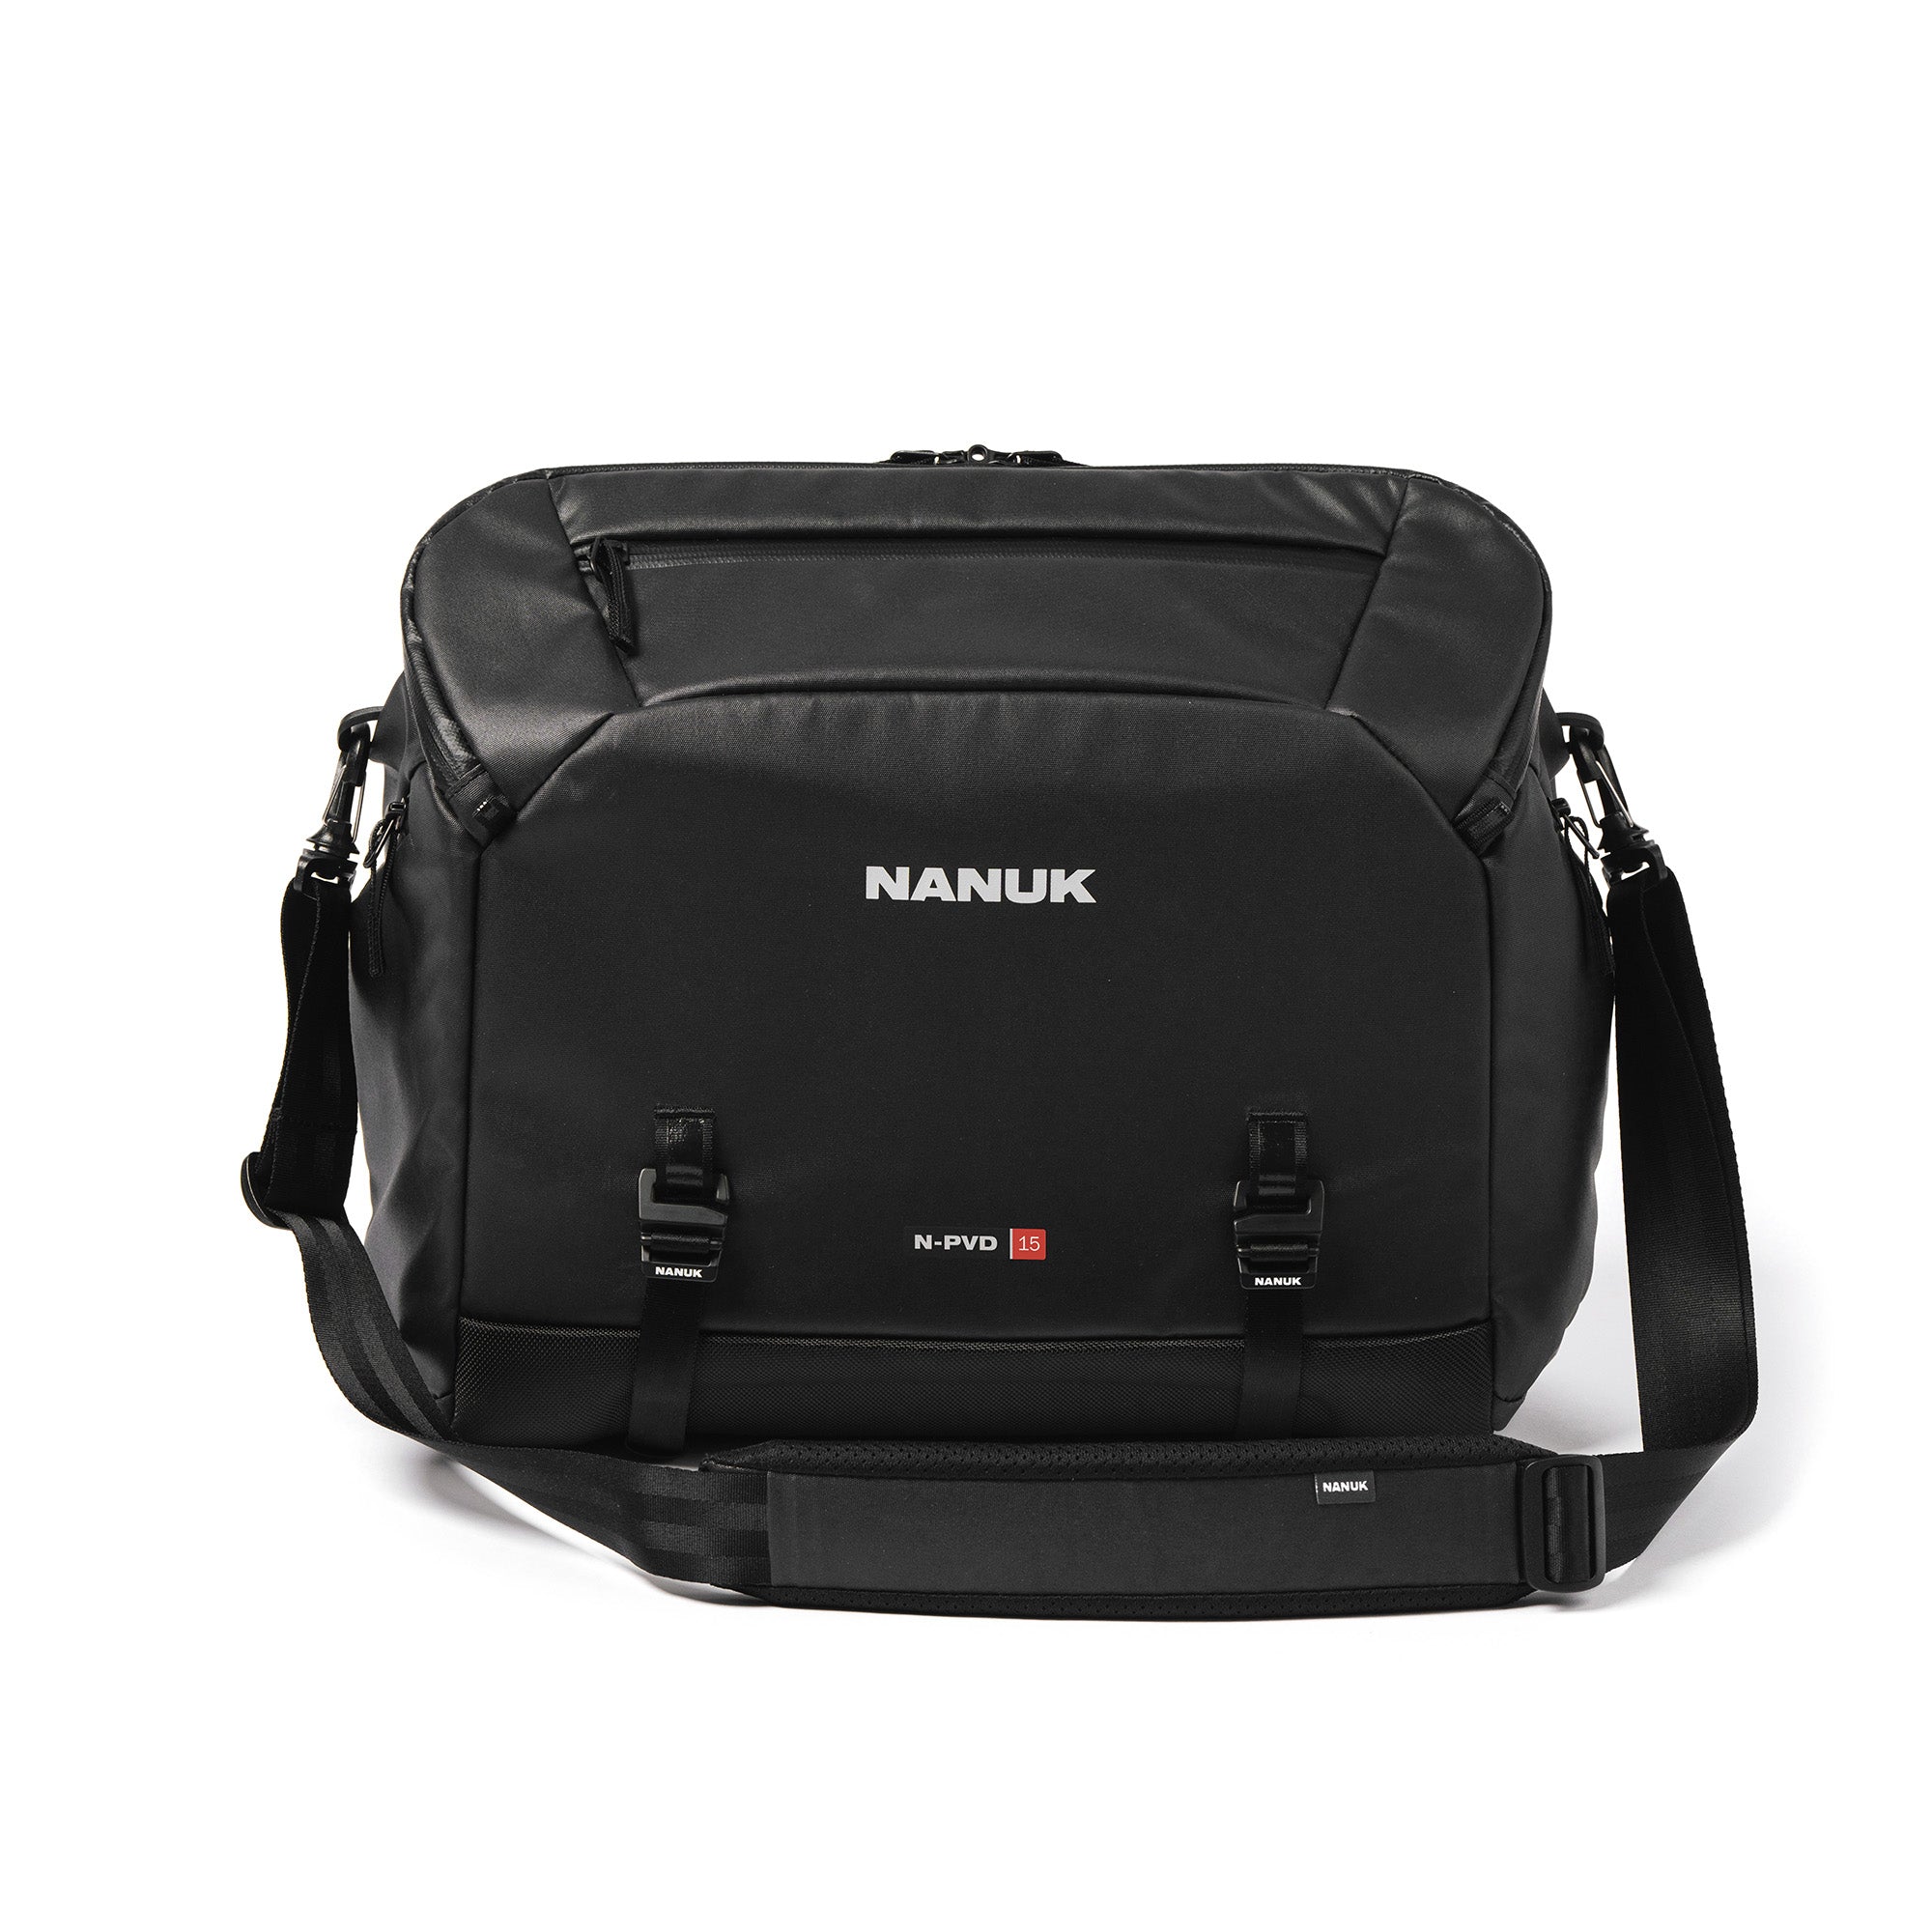 NANUK 15L Messenger Bag in Black